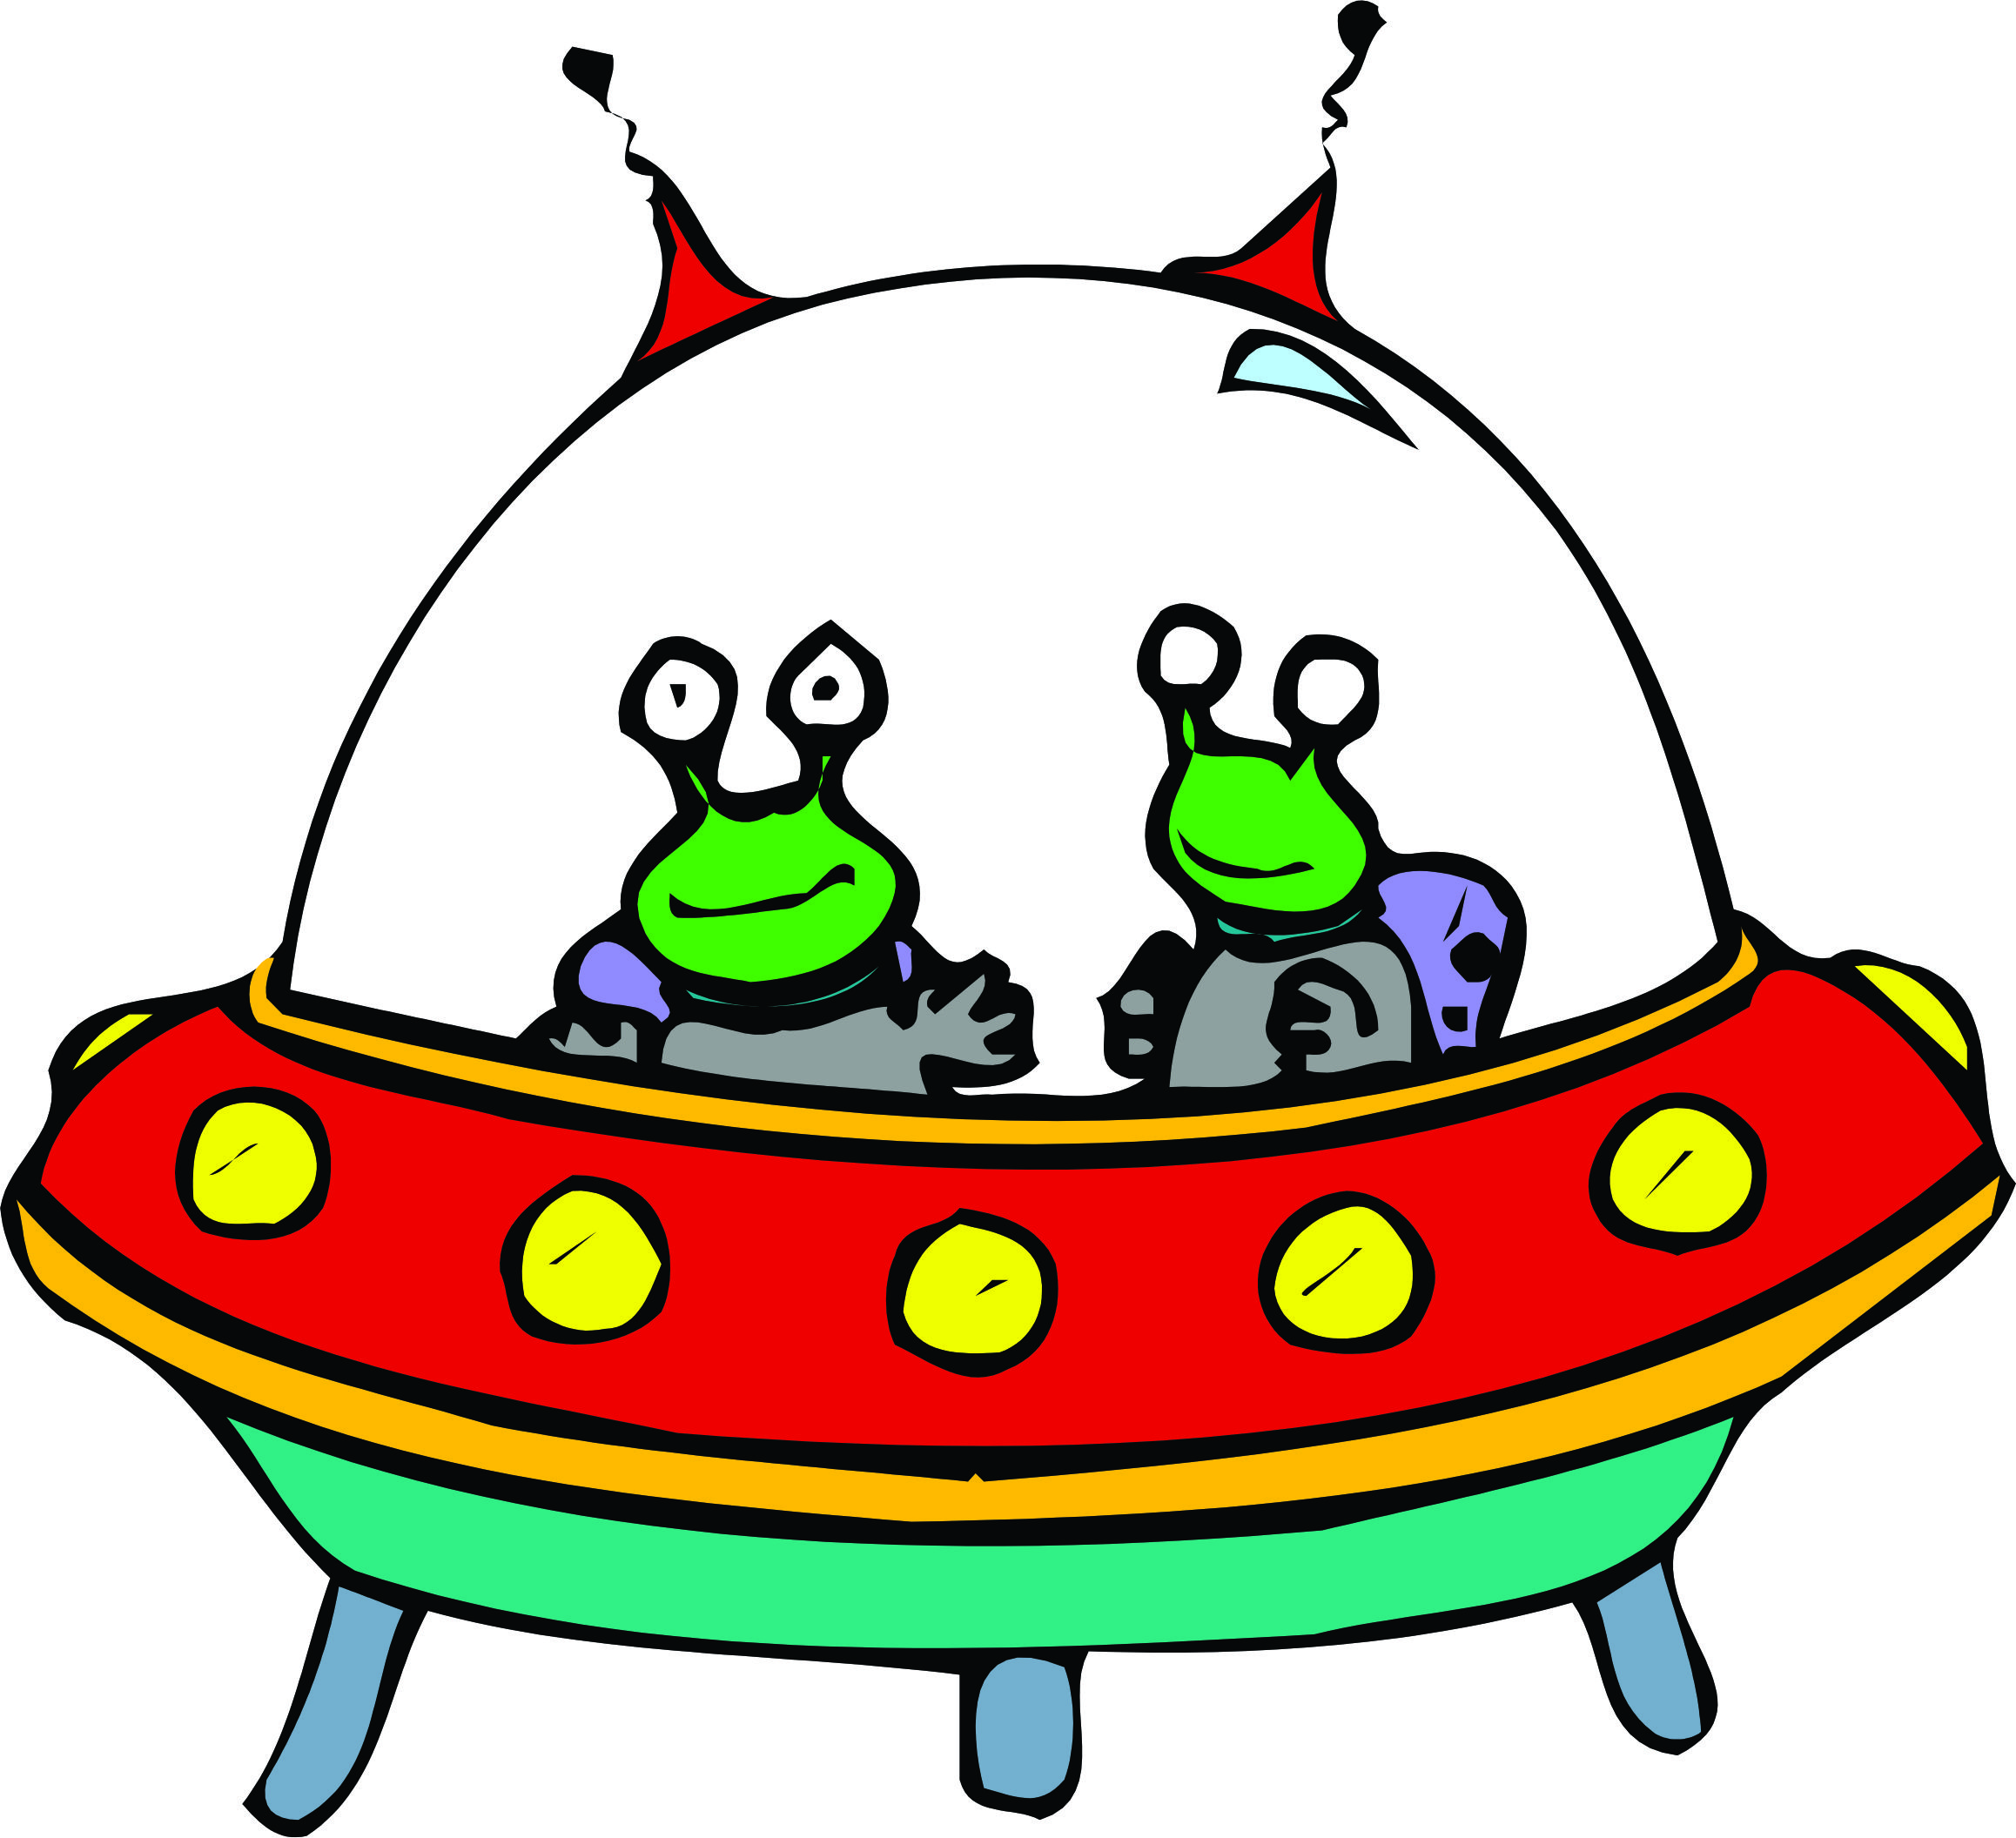 Spaceship clipart for kids danasoke top - dbclipart.com